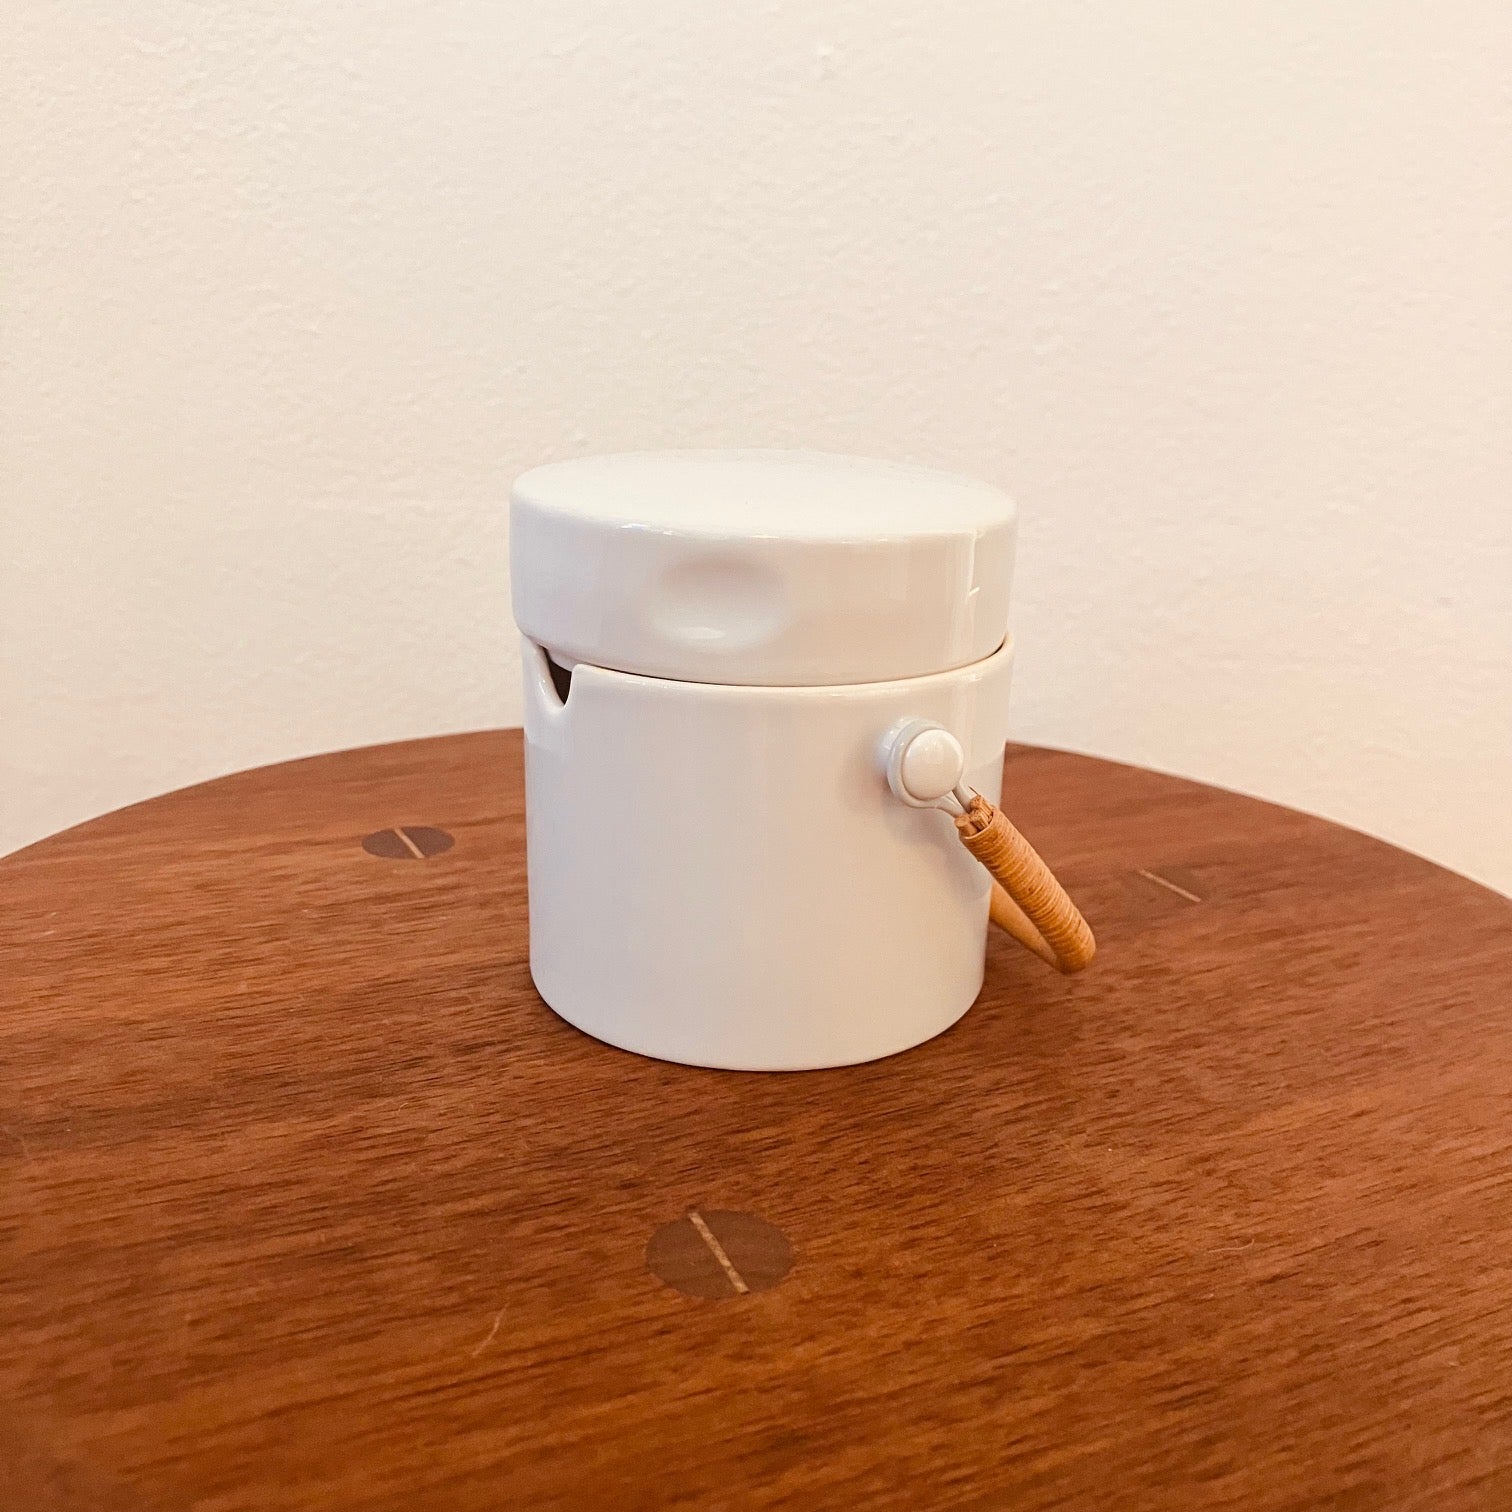 LaGardo Tackett White Porcelain and Wicker Sugarpot